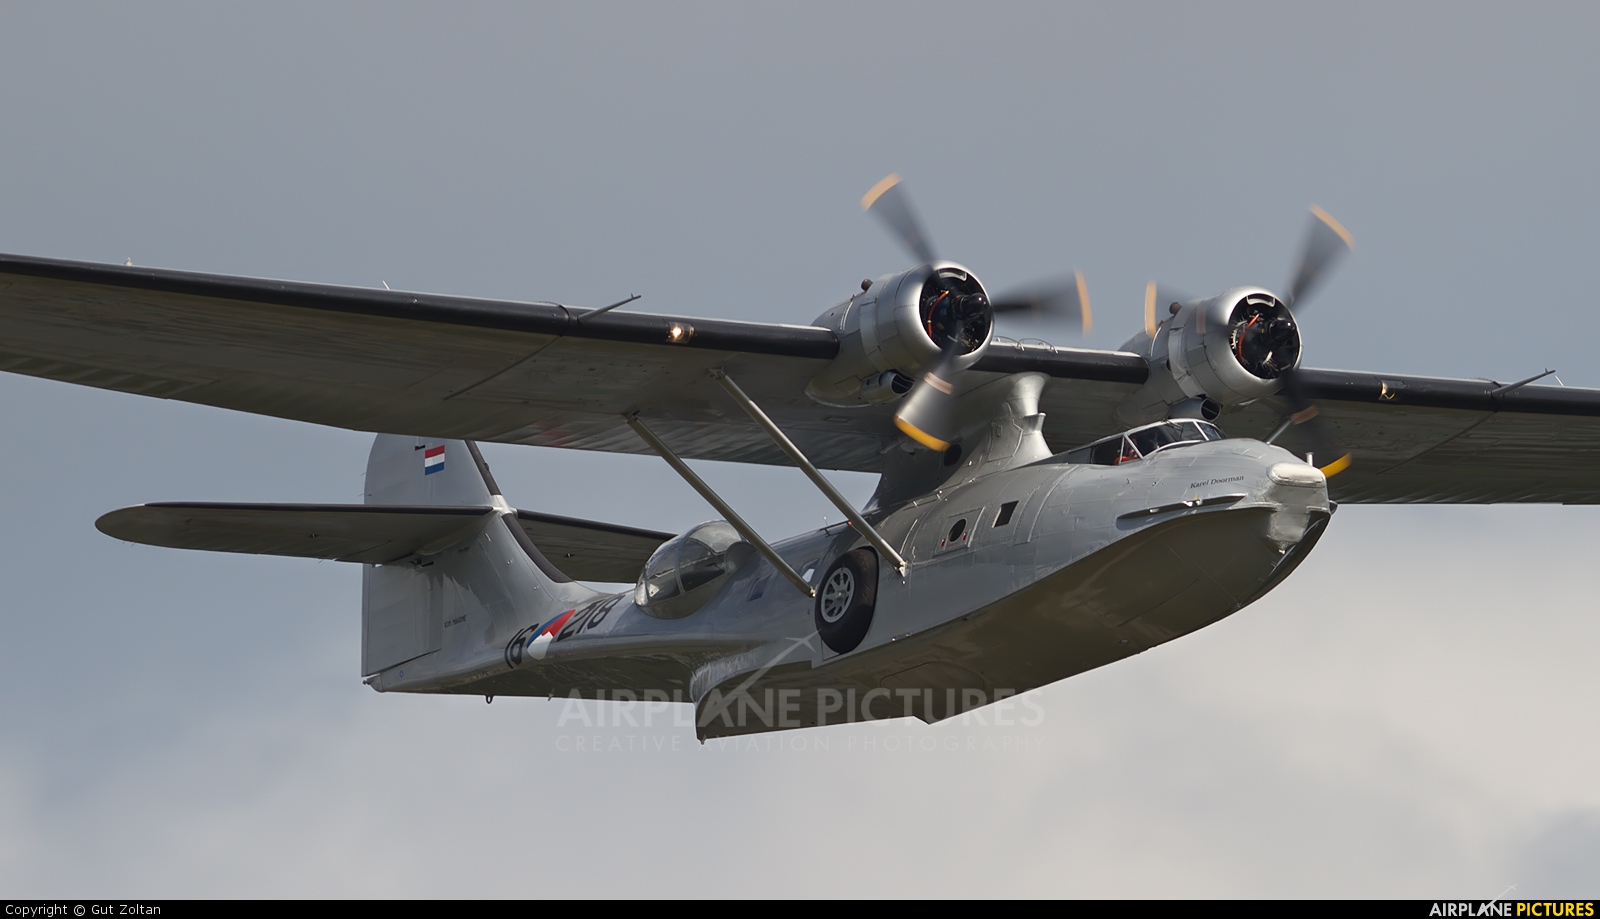 The Catalina Foundation PH-PBY aircraft at Gilze-Rijen